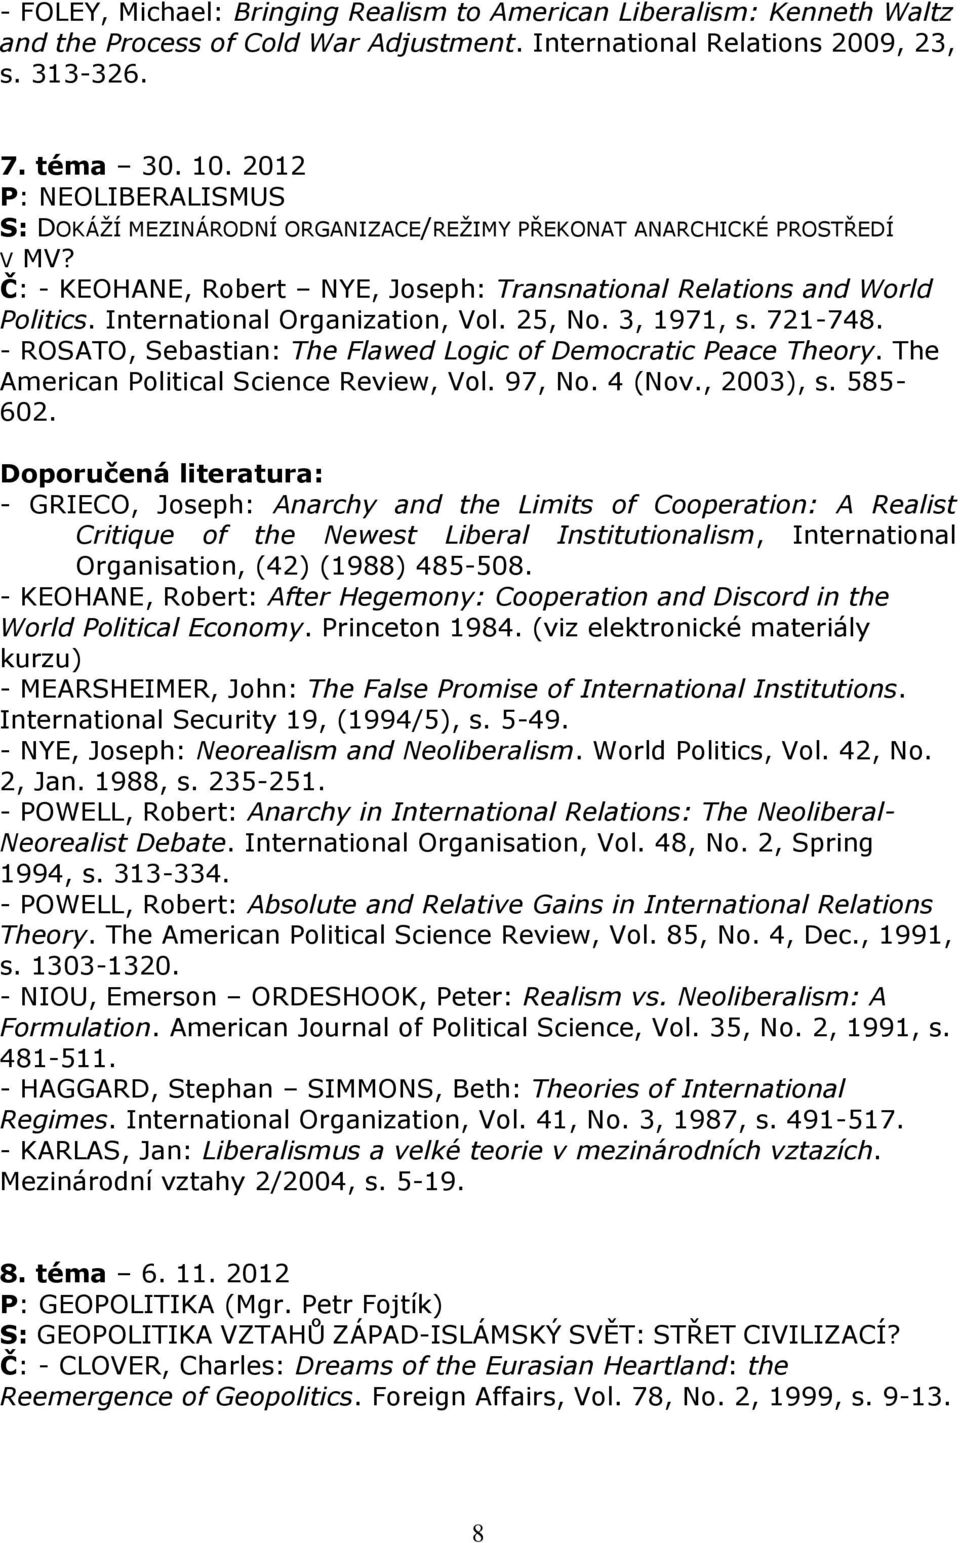 International Organization, Vol. 25, No. 3, 1971, s. 721-748. - ROSATO, Sebastian: The Flawed Logic of Democratic Peace Theory. The American Political Science Review, Vol. 97, No. 4 (Nov., 2003), s.